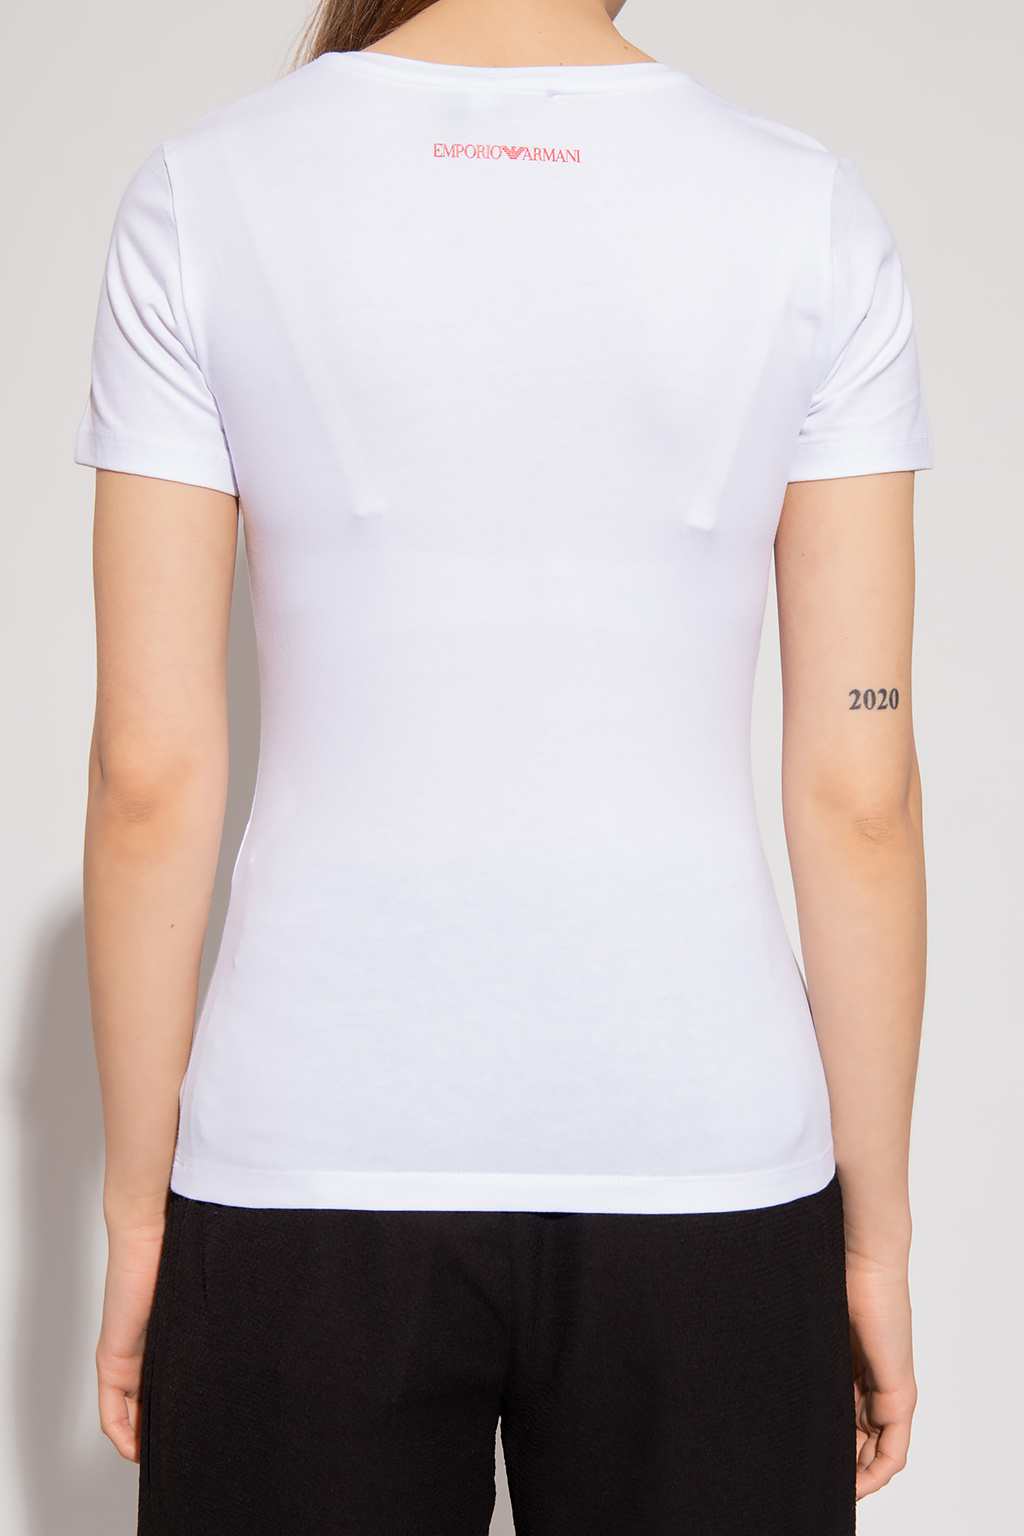 Emporio CLOTHING armani T-shirt with logo